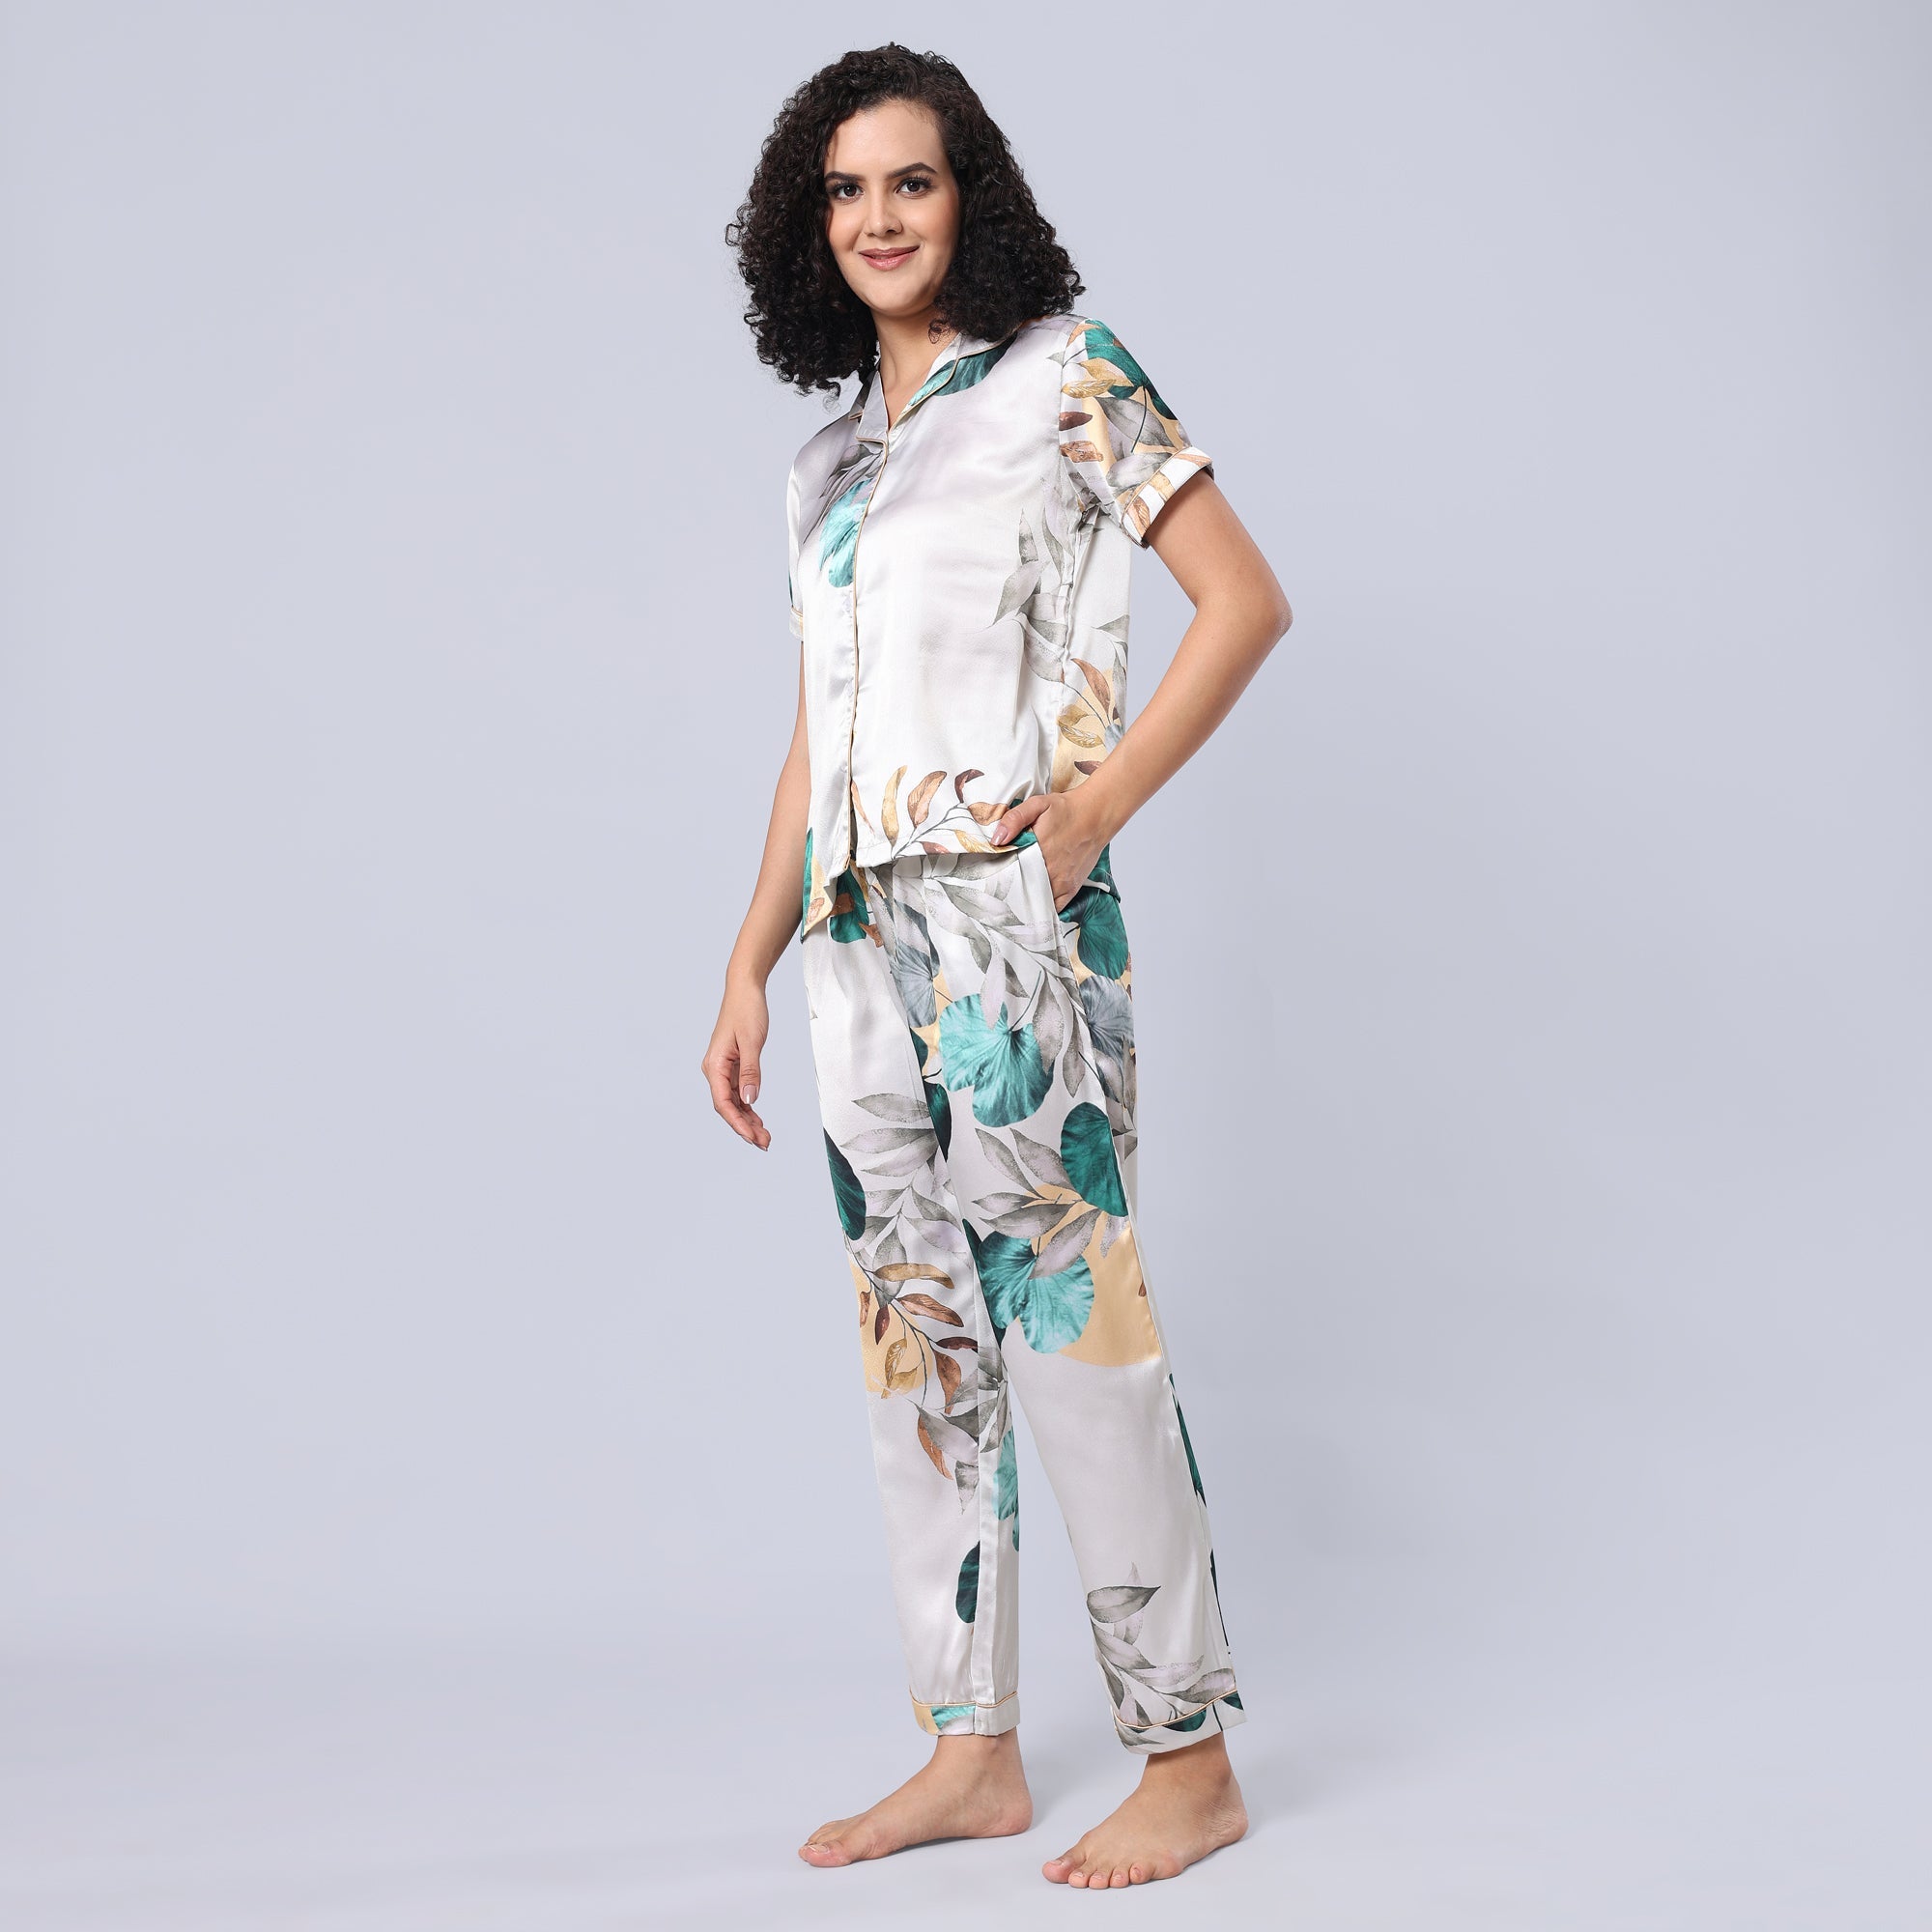 evolove Women Satin Short Sleeve Top and Pyjama Nightsuit Set